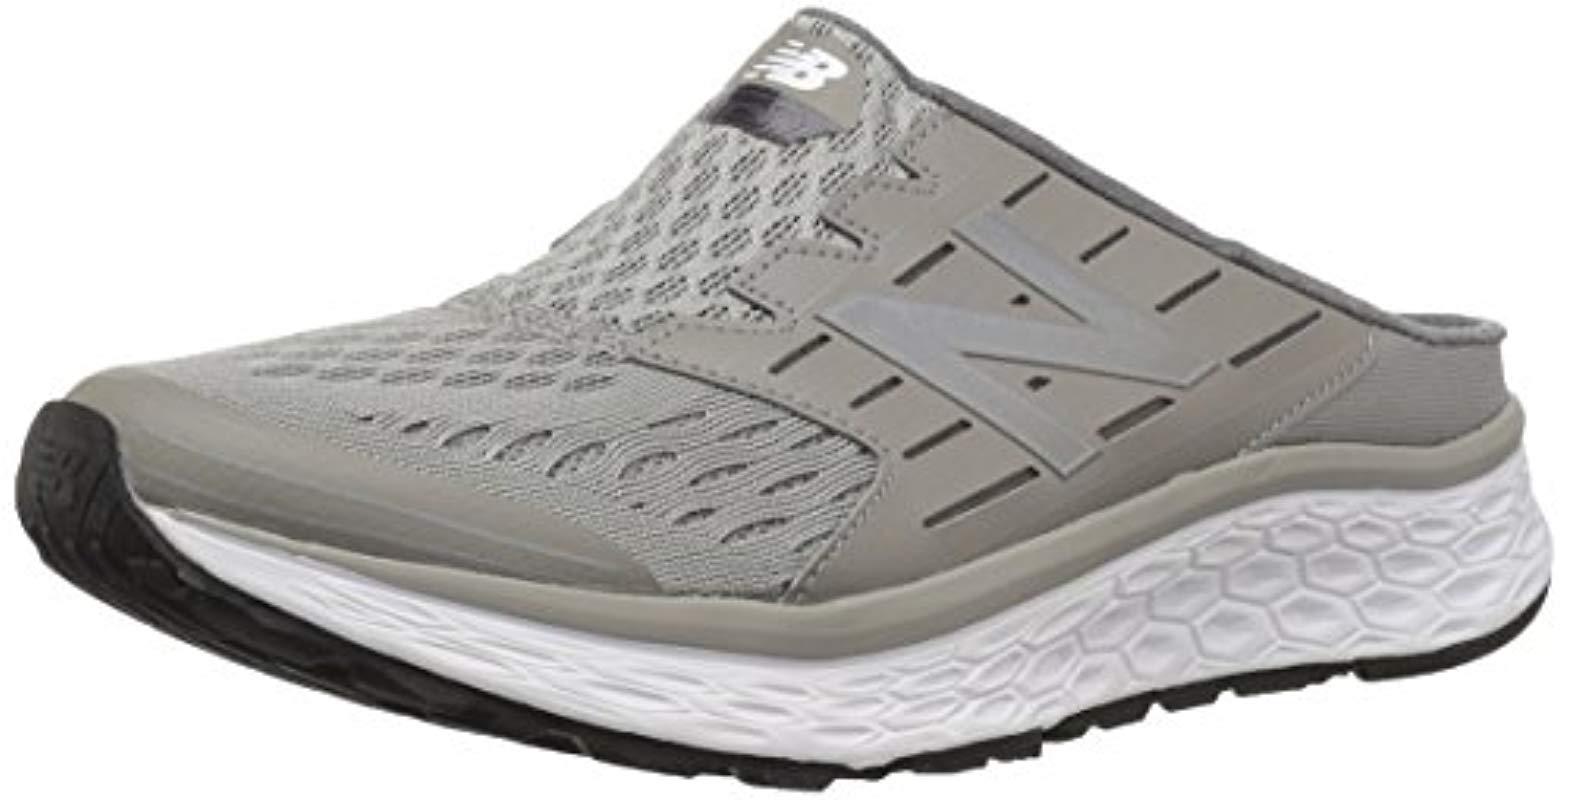 New Balance Leather 900v1 Fresh Foam Walking Shoe in Gray for Men - Lyst